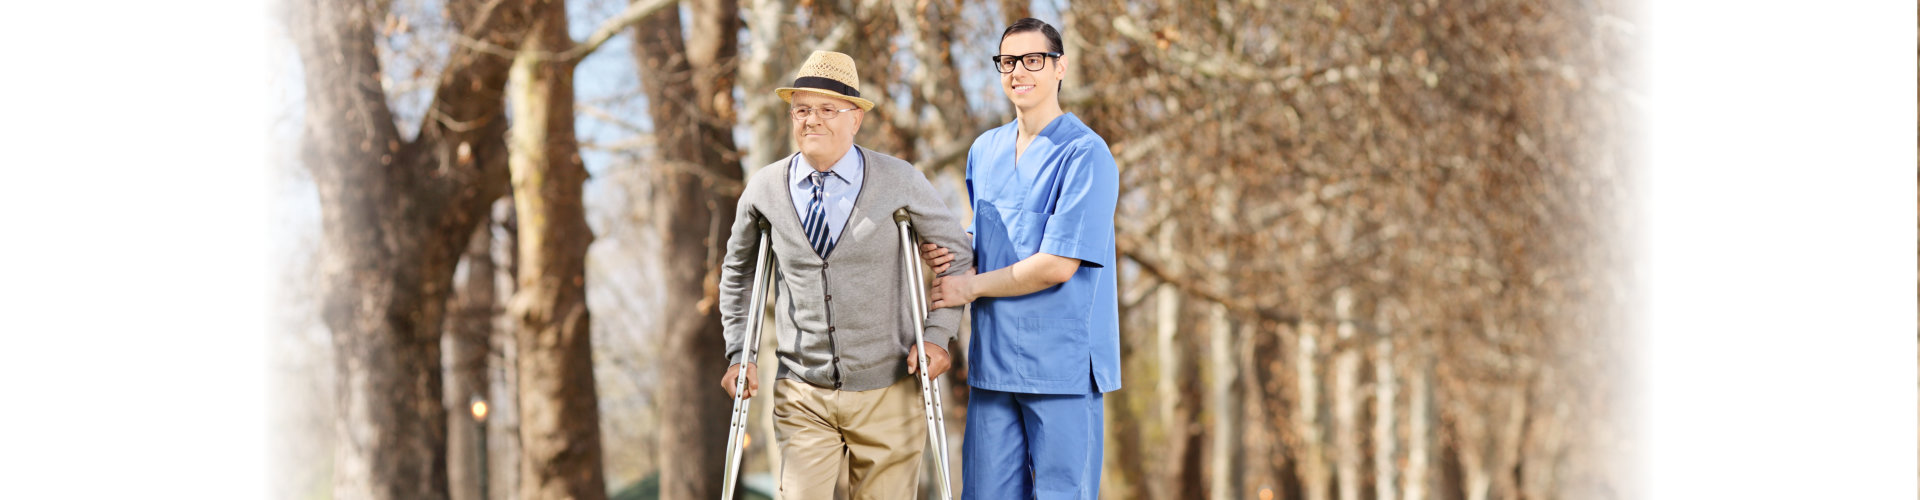 caregiver assisting seniors